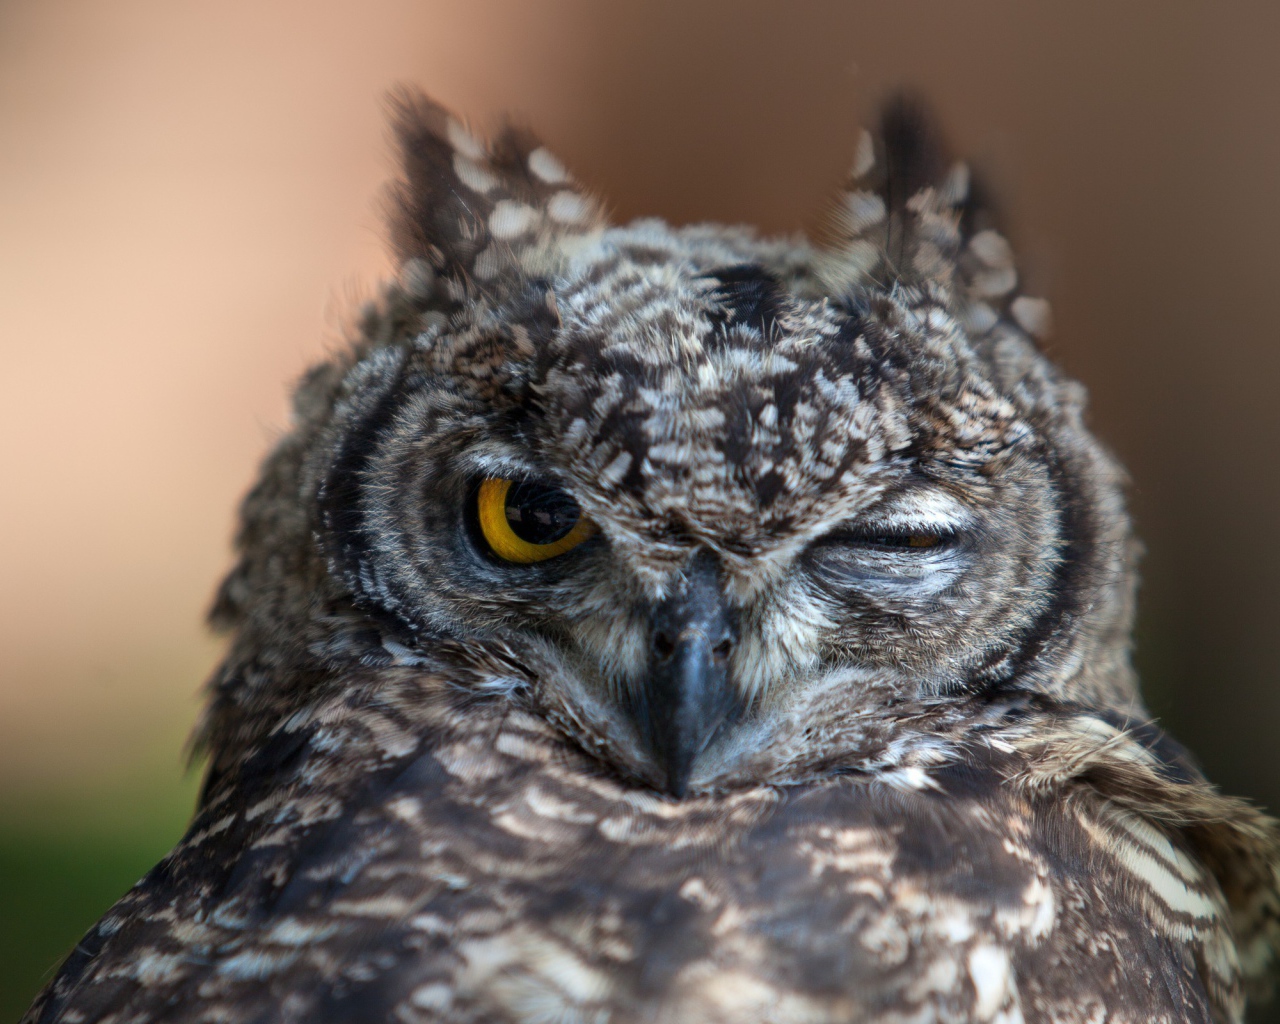 Owl winks